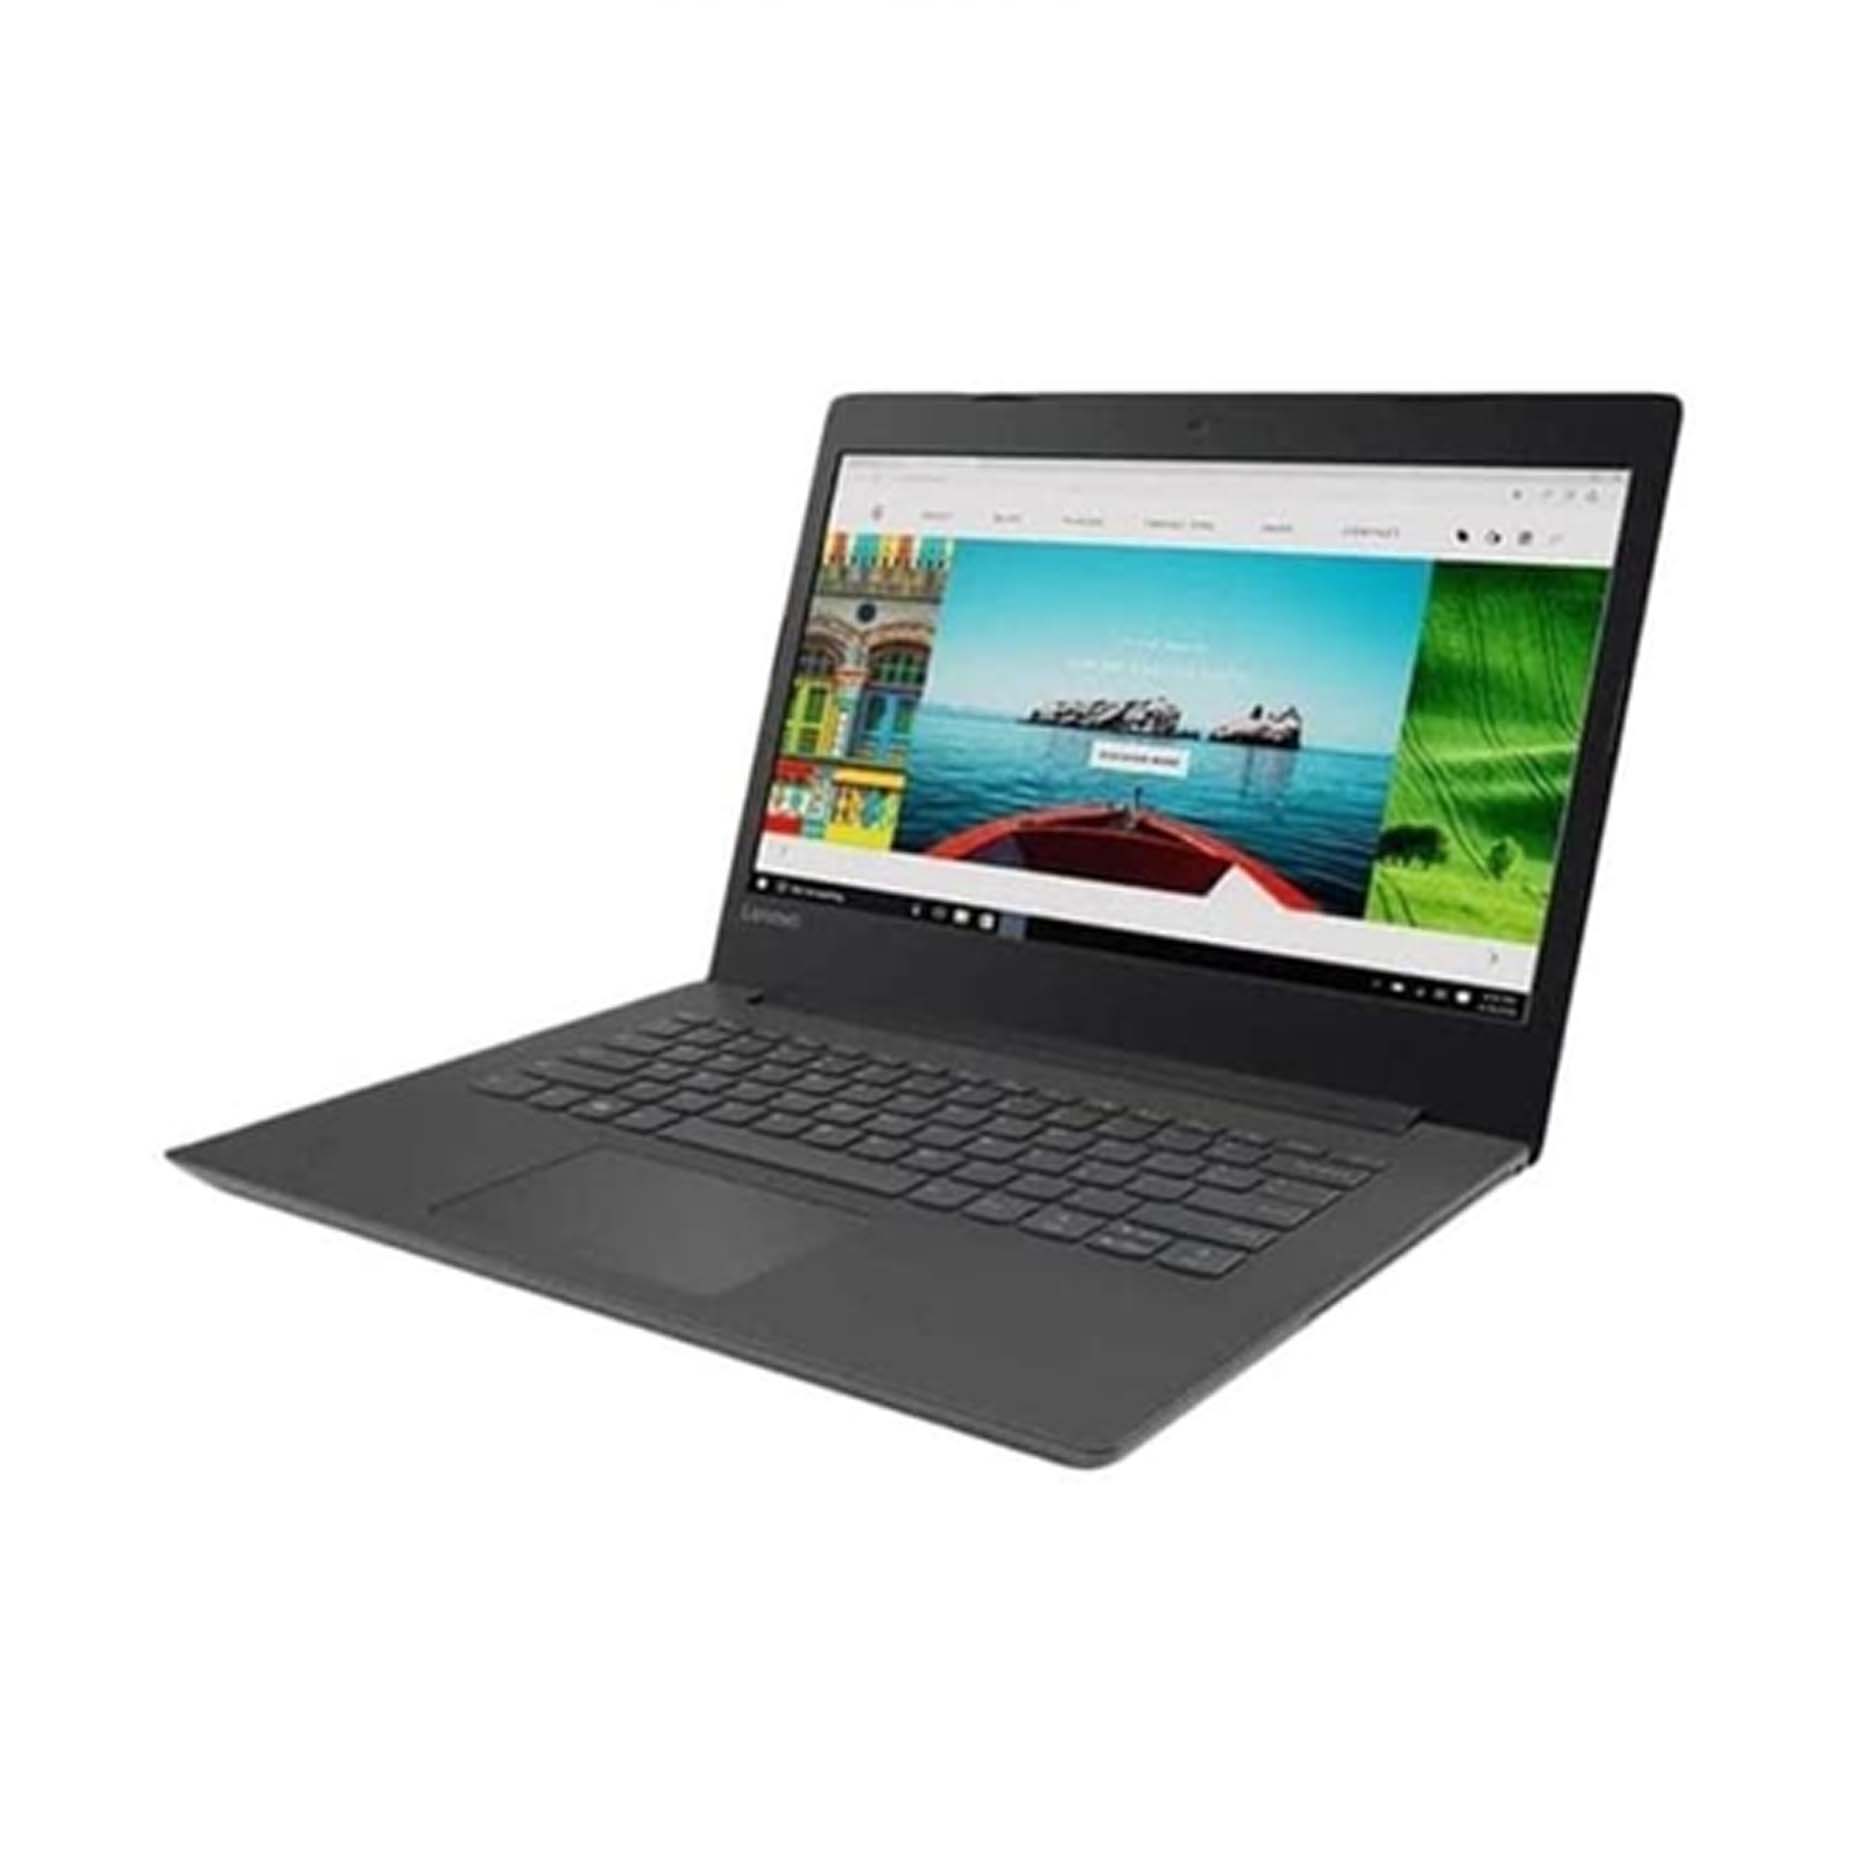 Harga Lenovo Ideapad IP330-14IKBR B9ID Laptop Celeron N3867 4GB 1TB Integrated 14 Inch Windows 10 Black